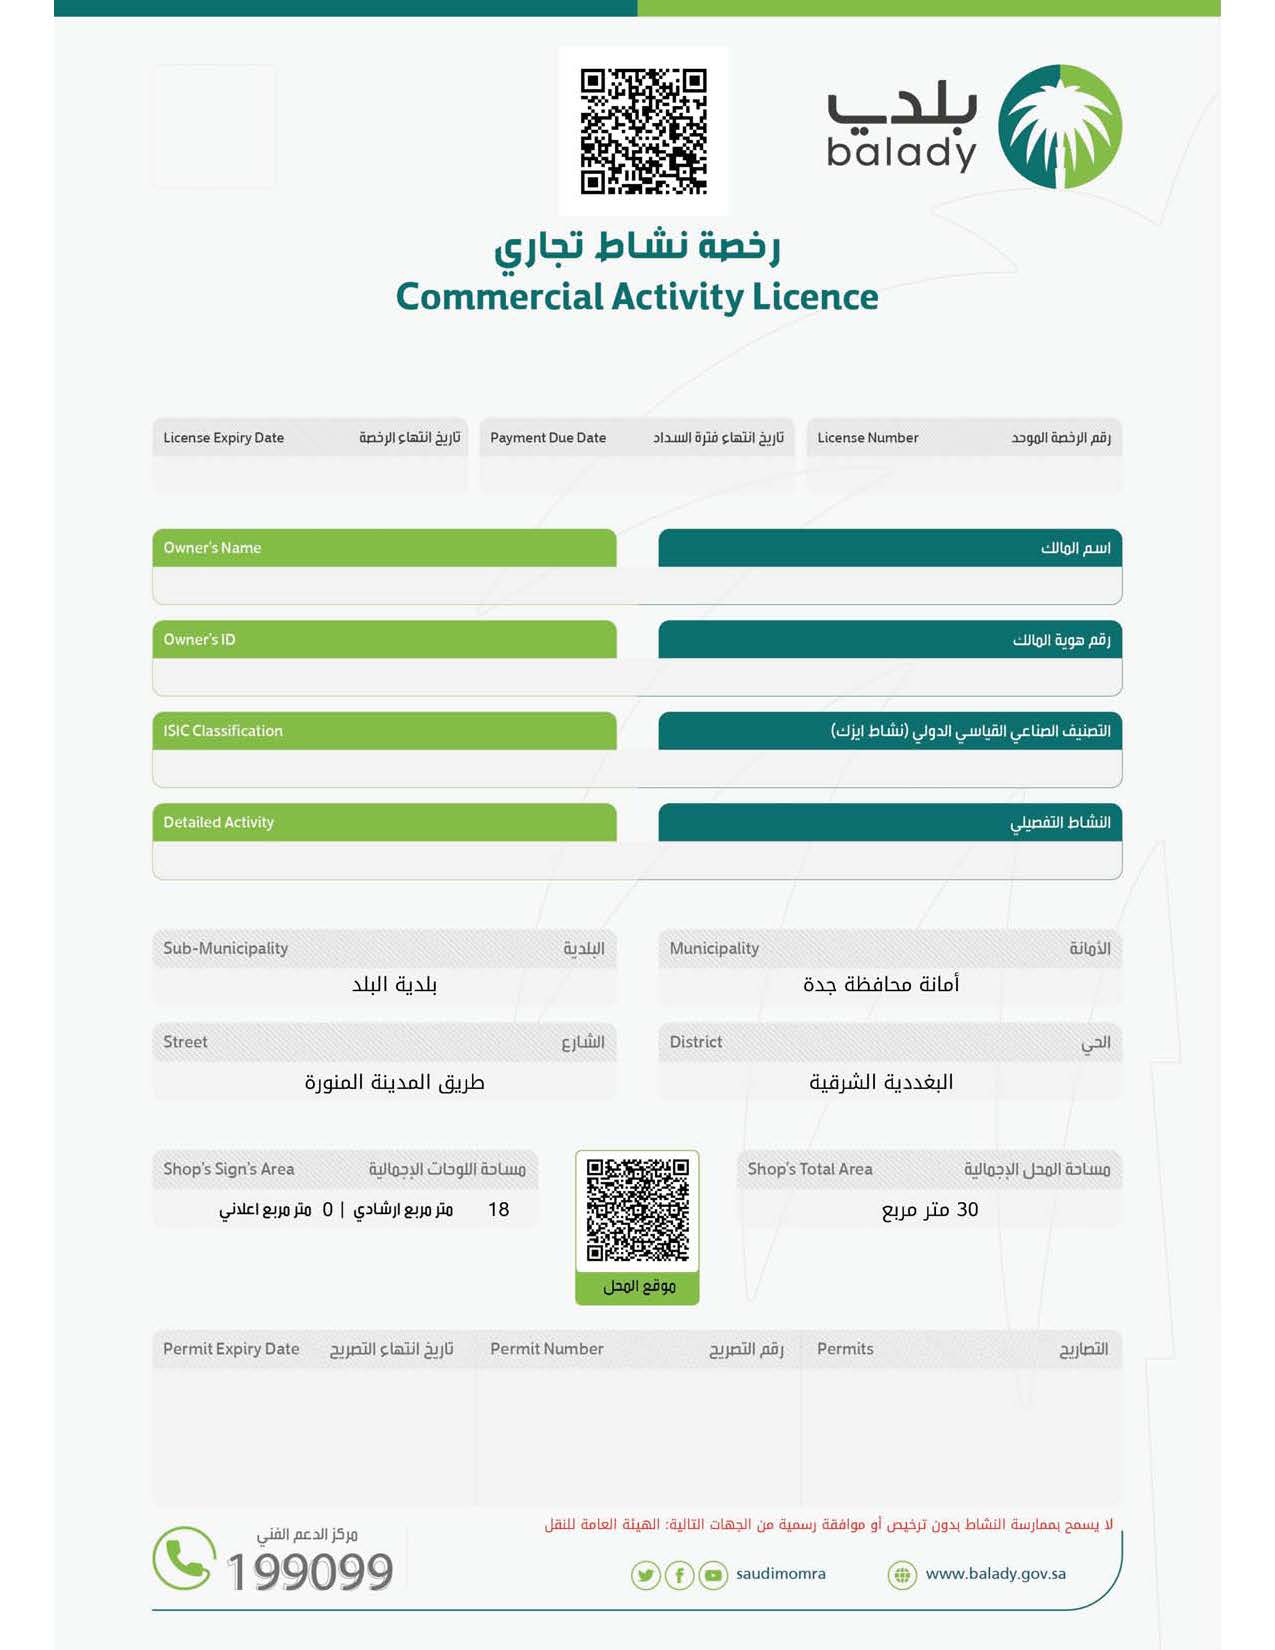 البلديات Page 11 One of the leading companies and a significant number in all its fields